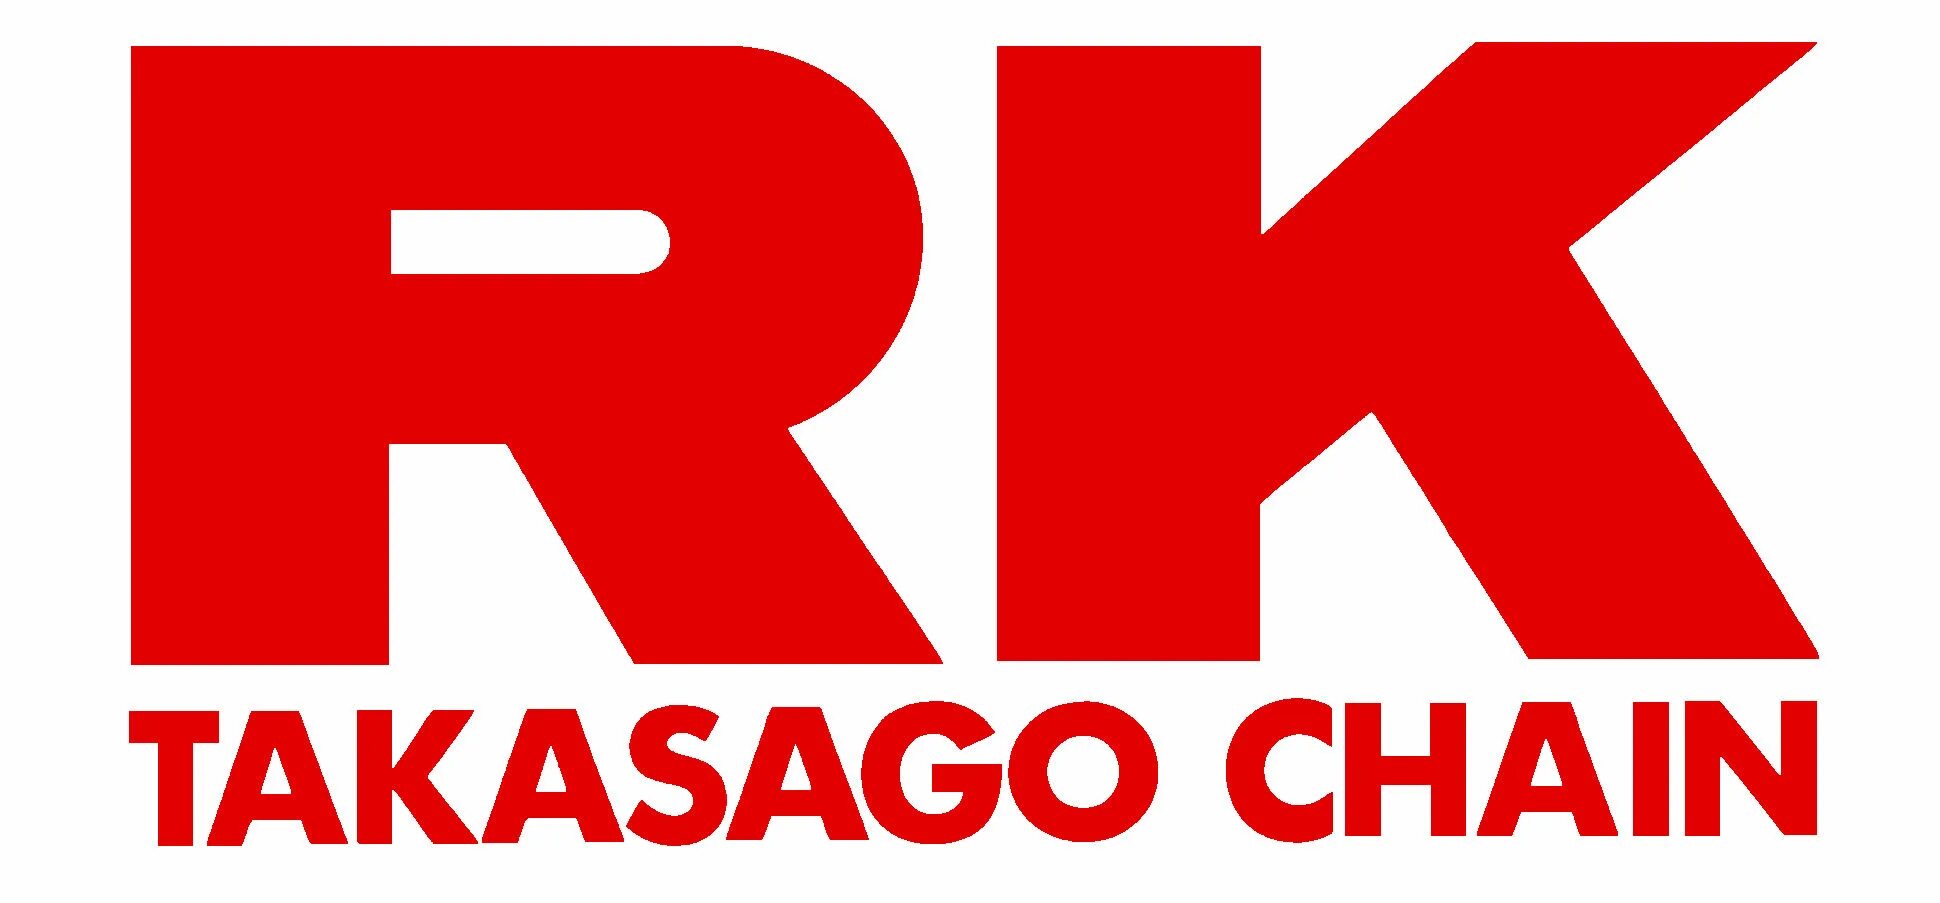 Rk finvesto. RK Takasago Chain. RK логотип. Takasago логотип. RK ефлфыфпщ Chains Спонсор логотип.